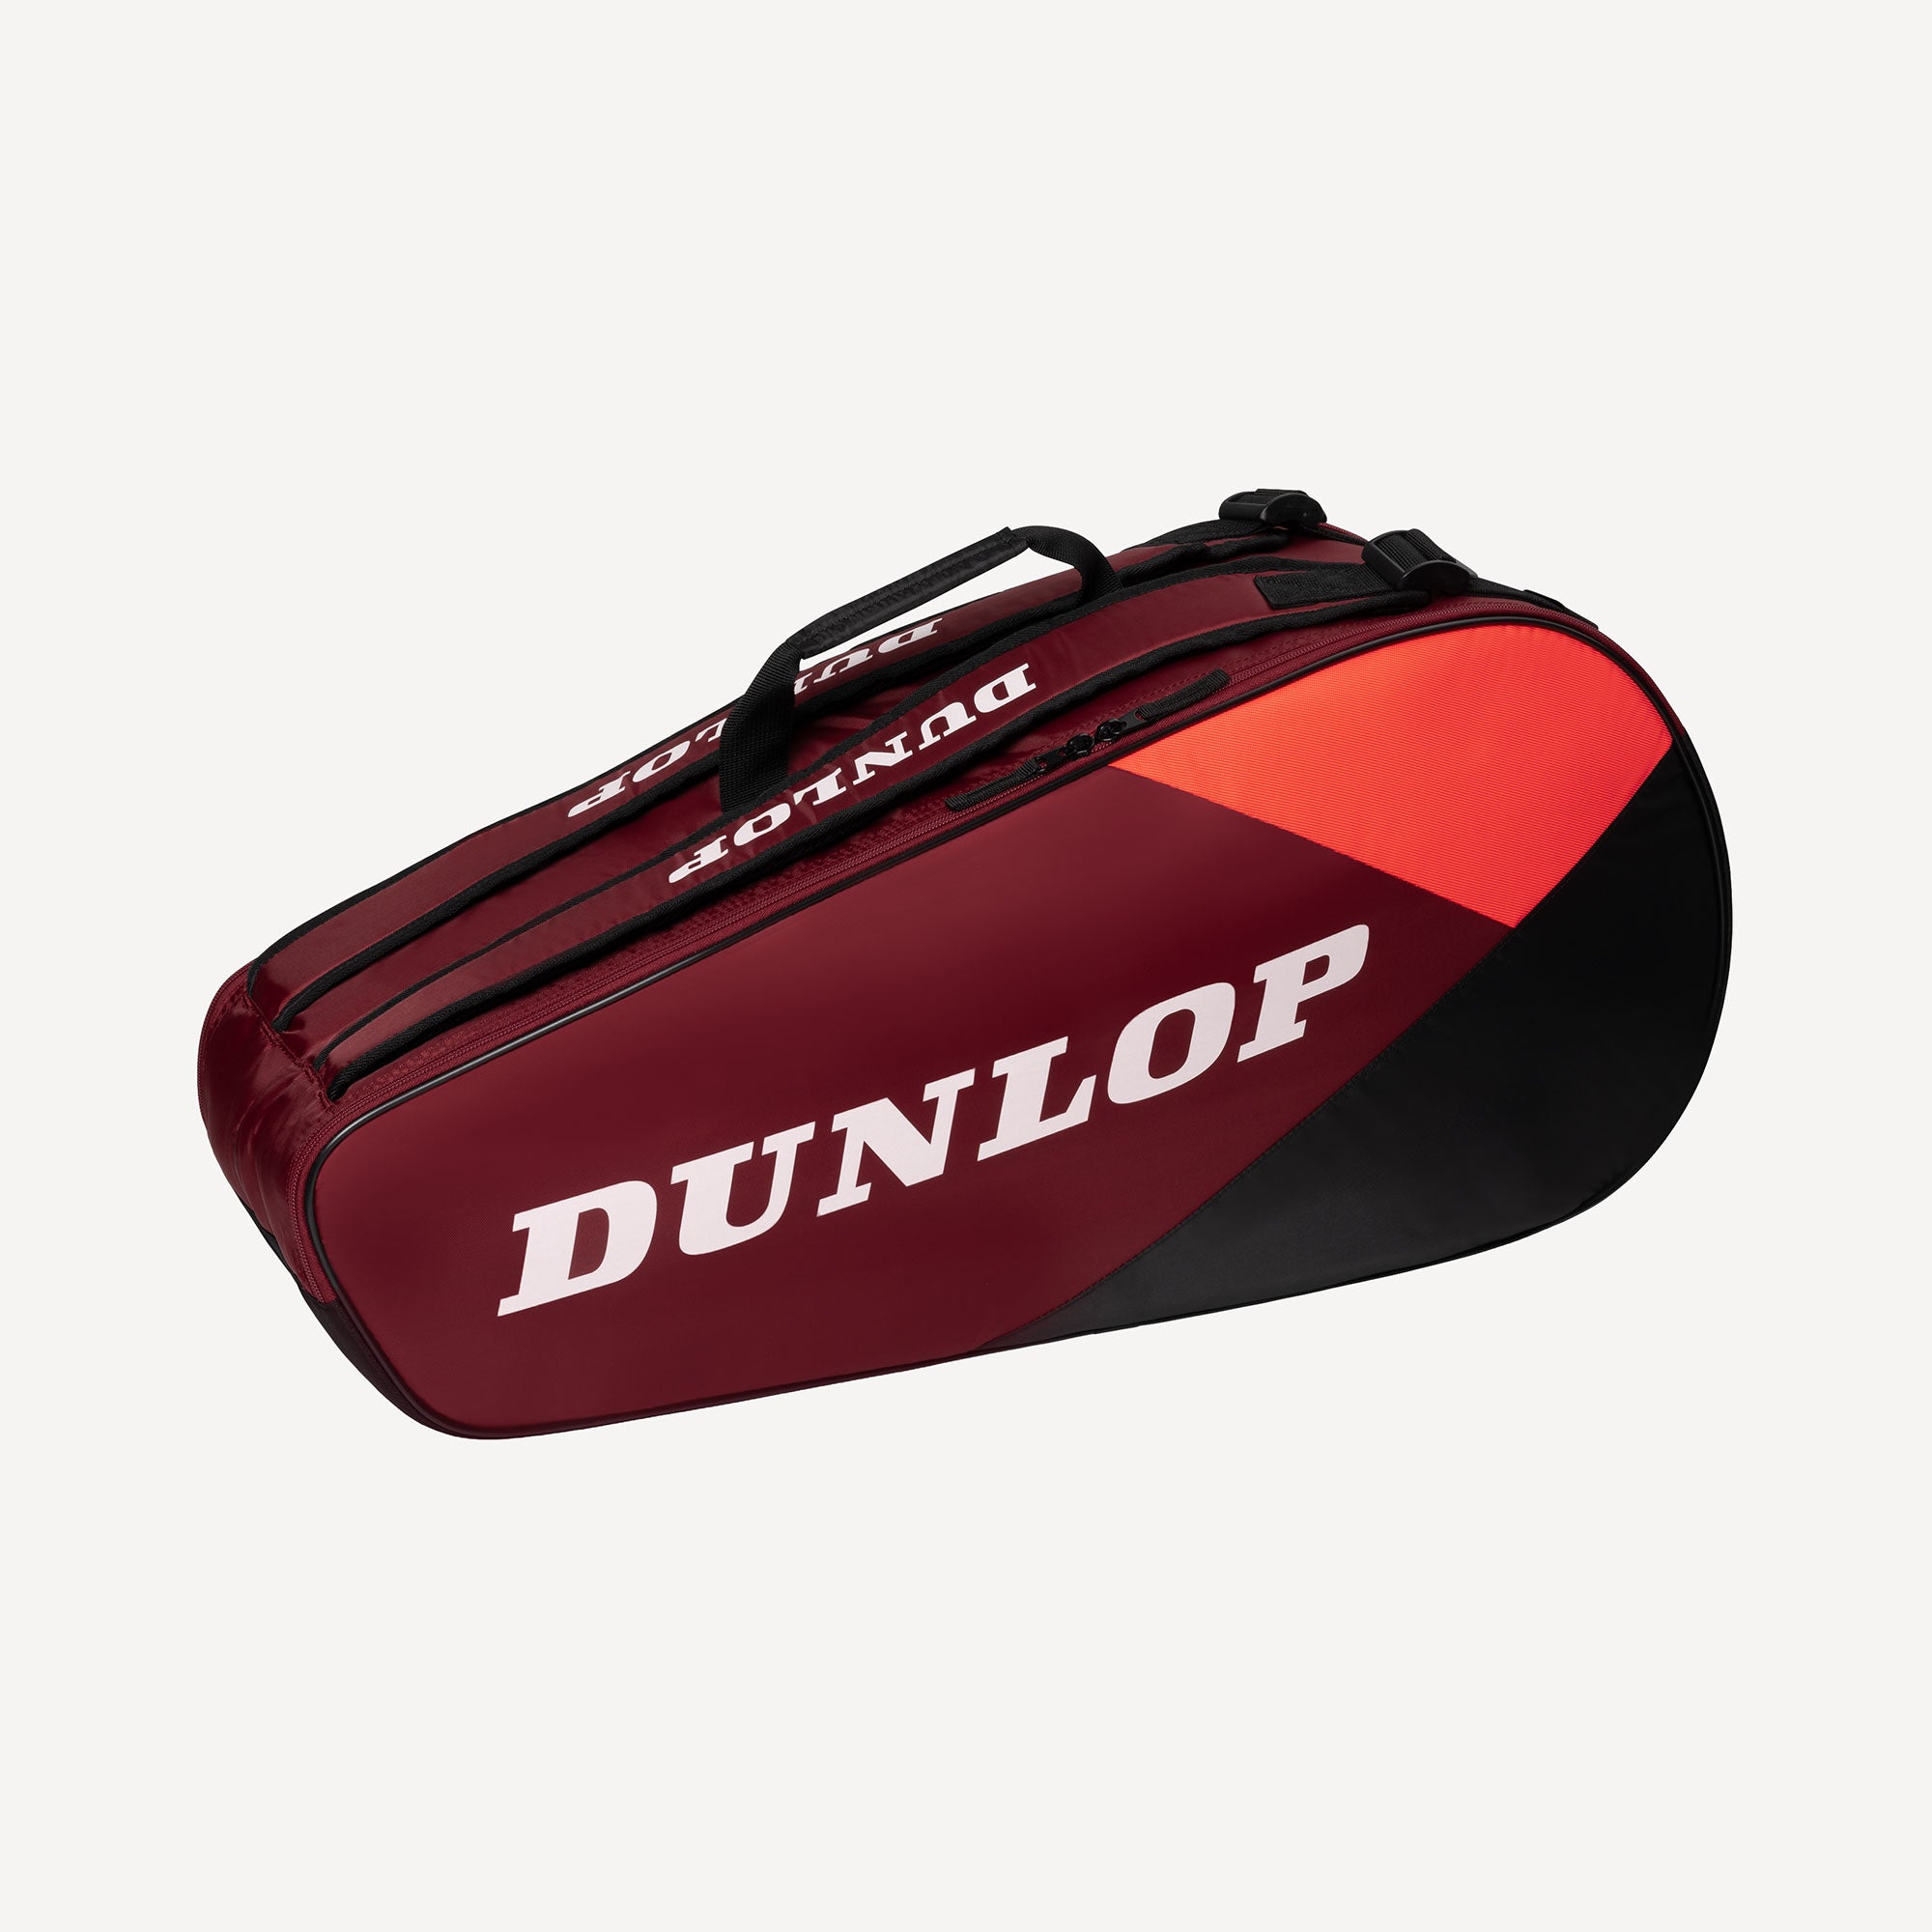 Dunlop CX Club 6 Racket Tennis Bag - Red (2)